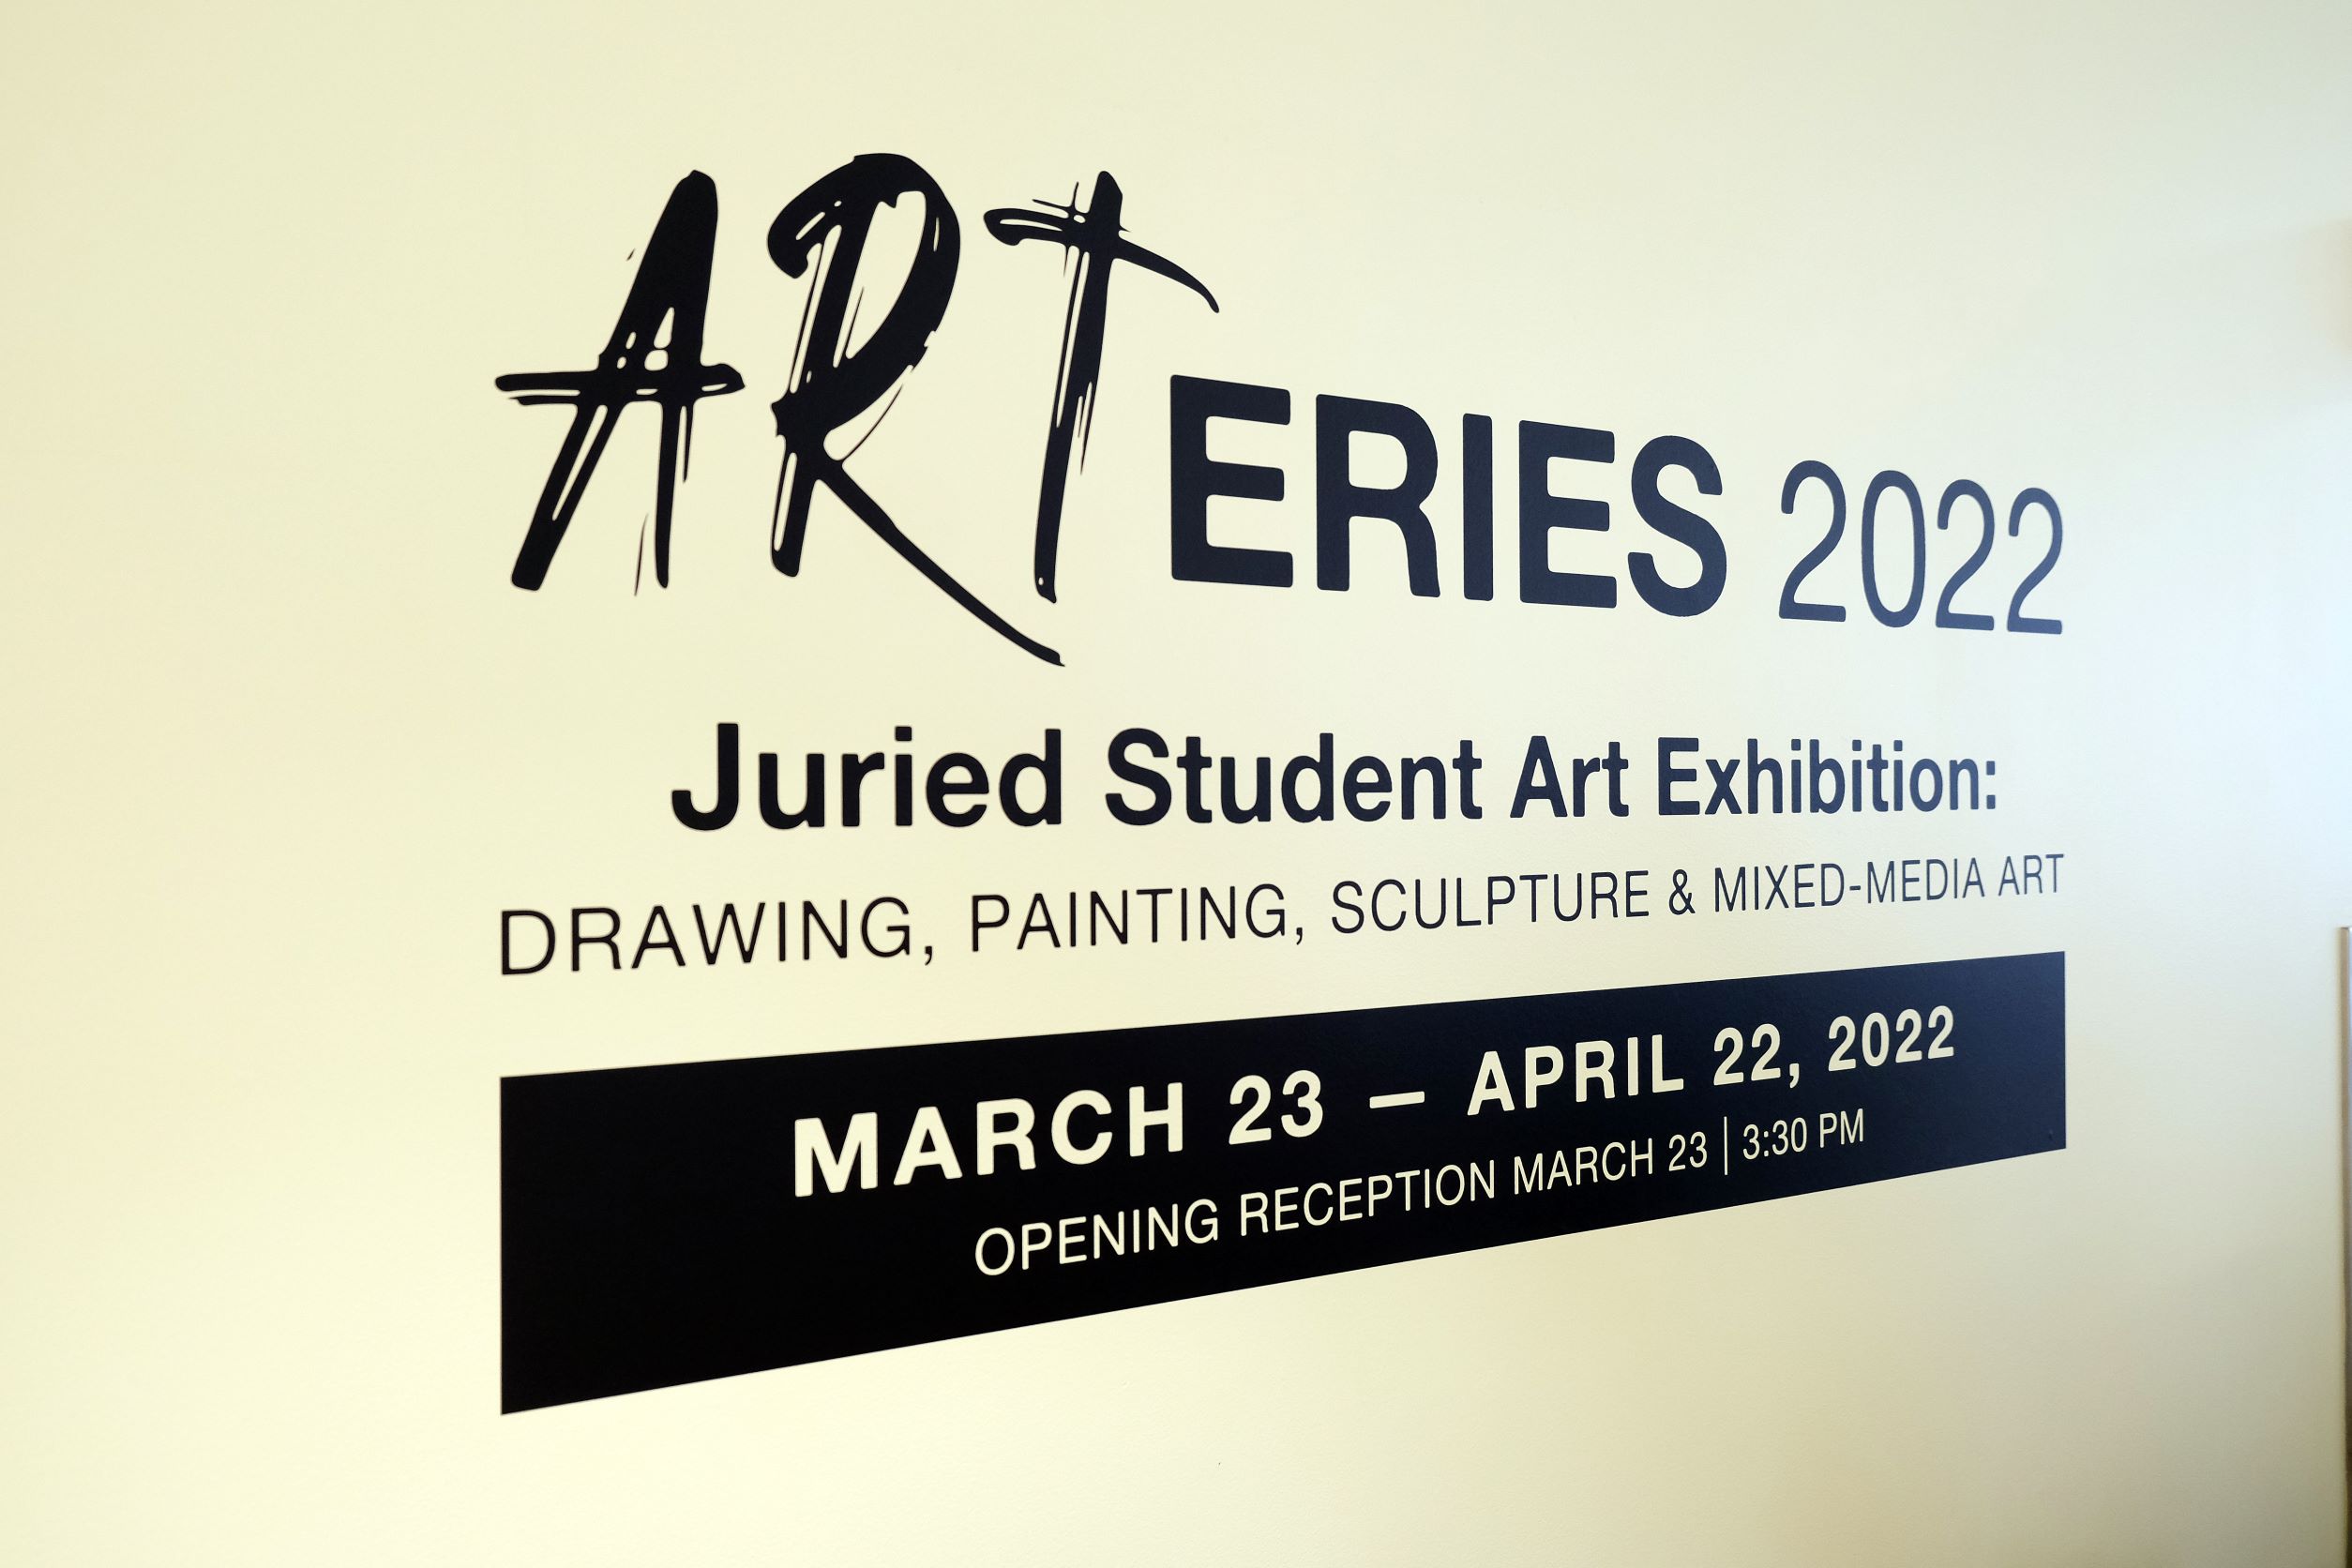 ARTeries 2022 Opening Reception